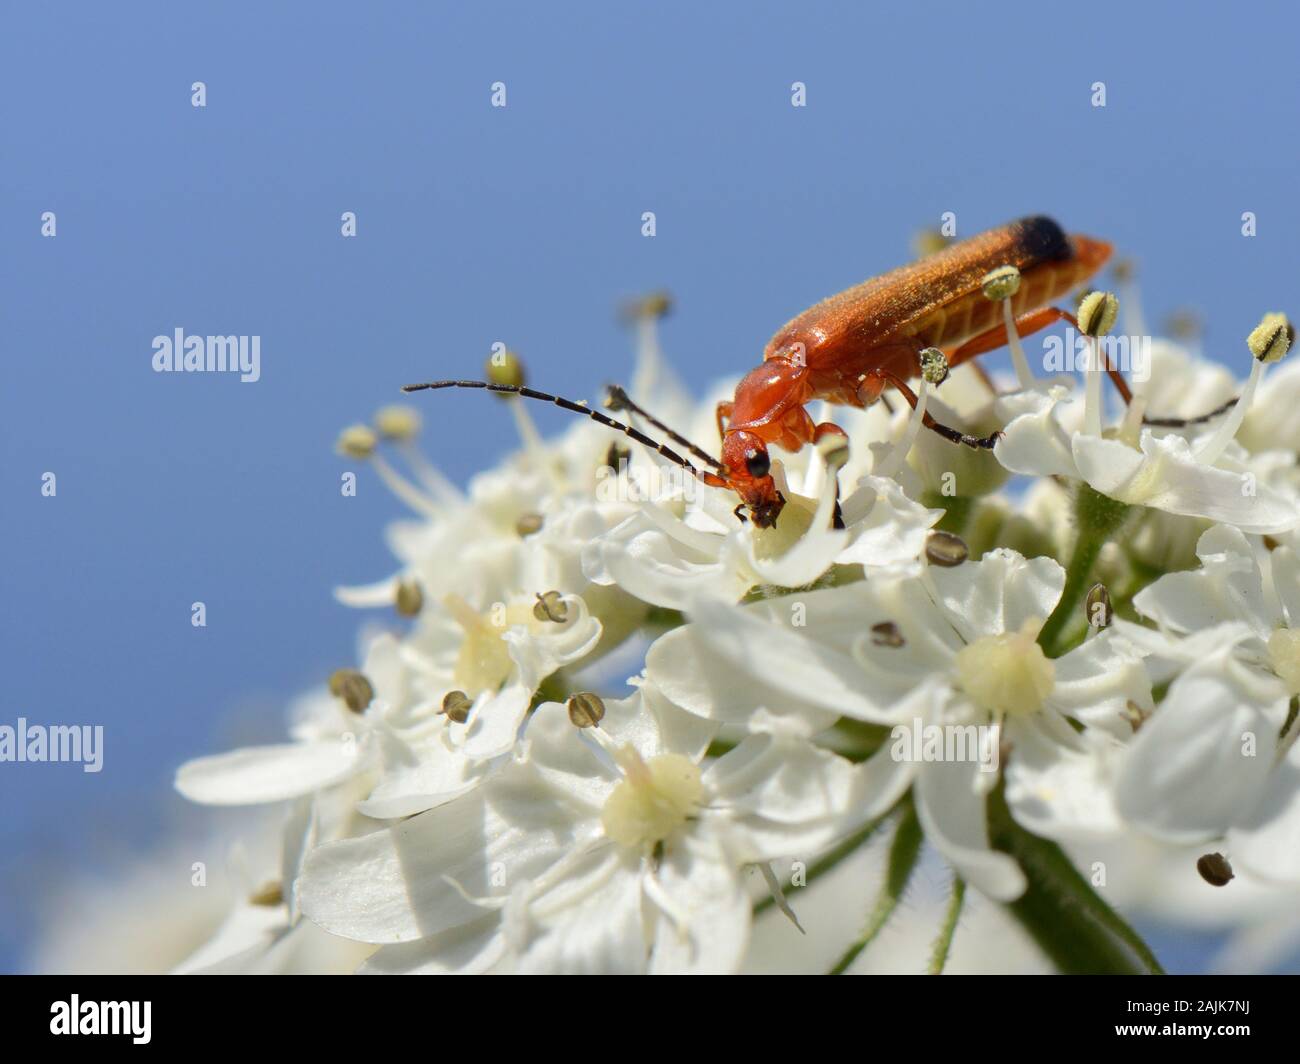 Common red soldier beetle / Black-tipped soldier beetle (Rhagonycha fulva) nectar feeding on Common hogweed flowers (Heracleum sphondylium), UK. Stock Photo